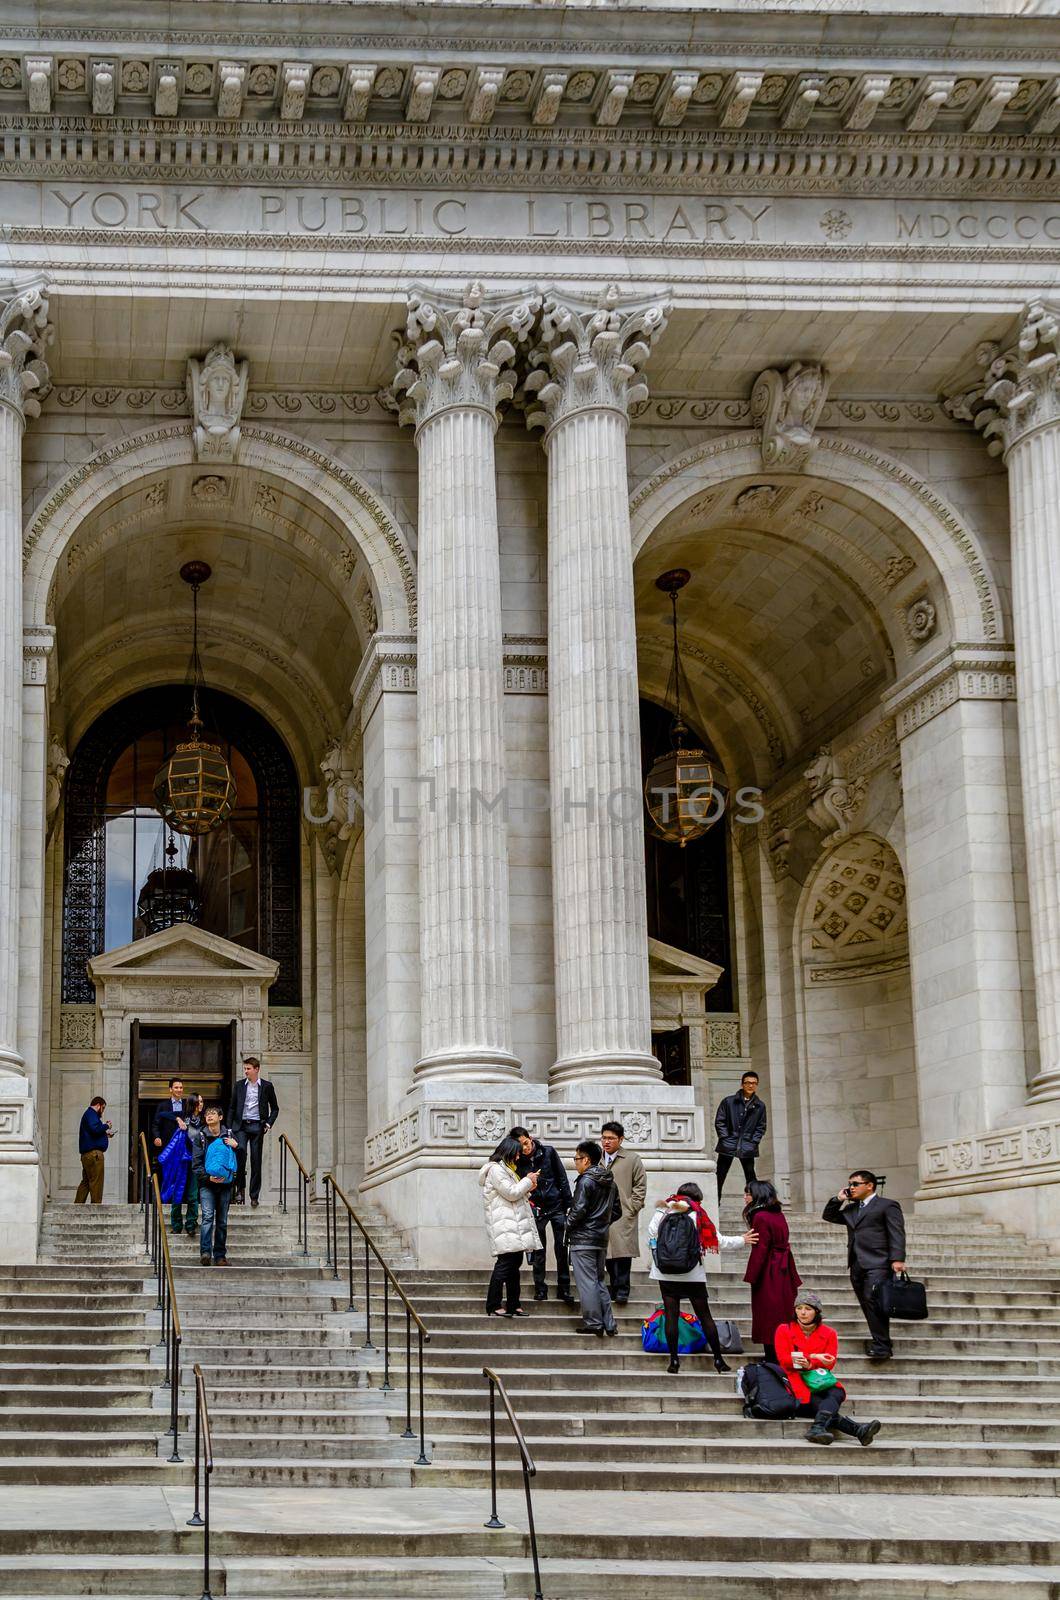 New York Public Library Entrance by bildgigant